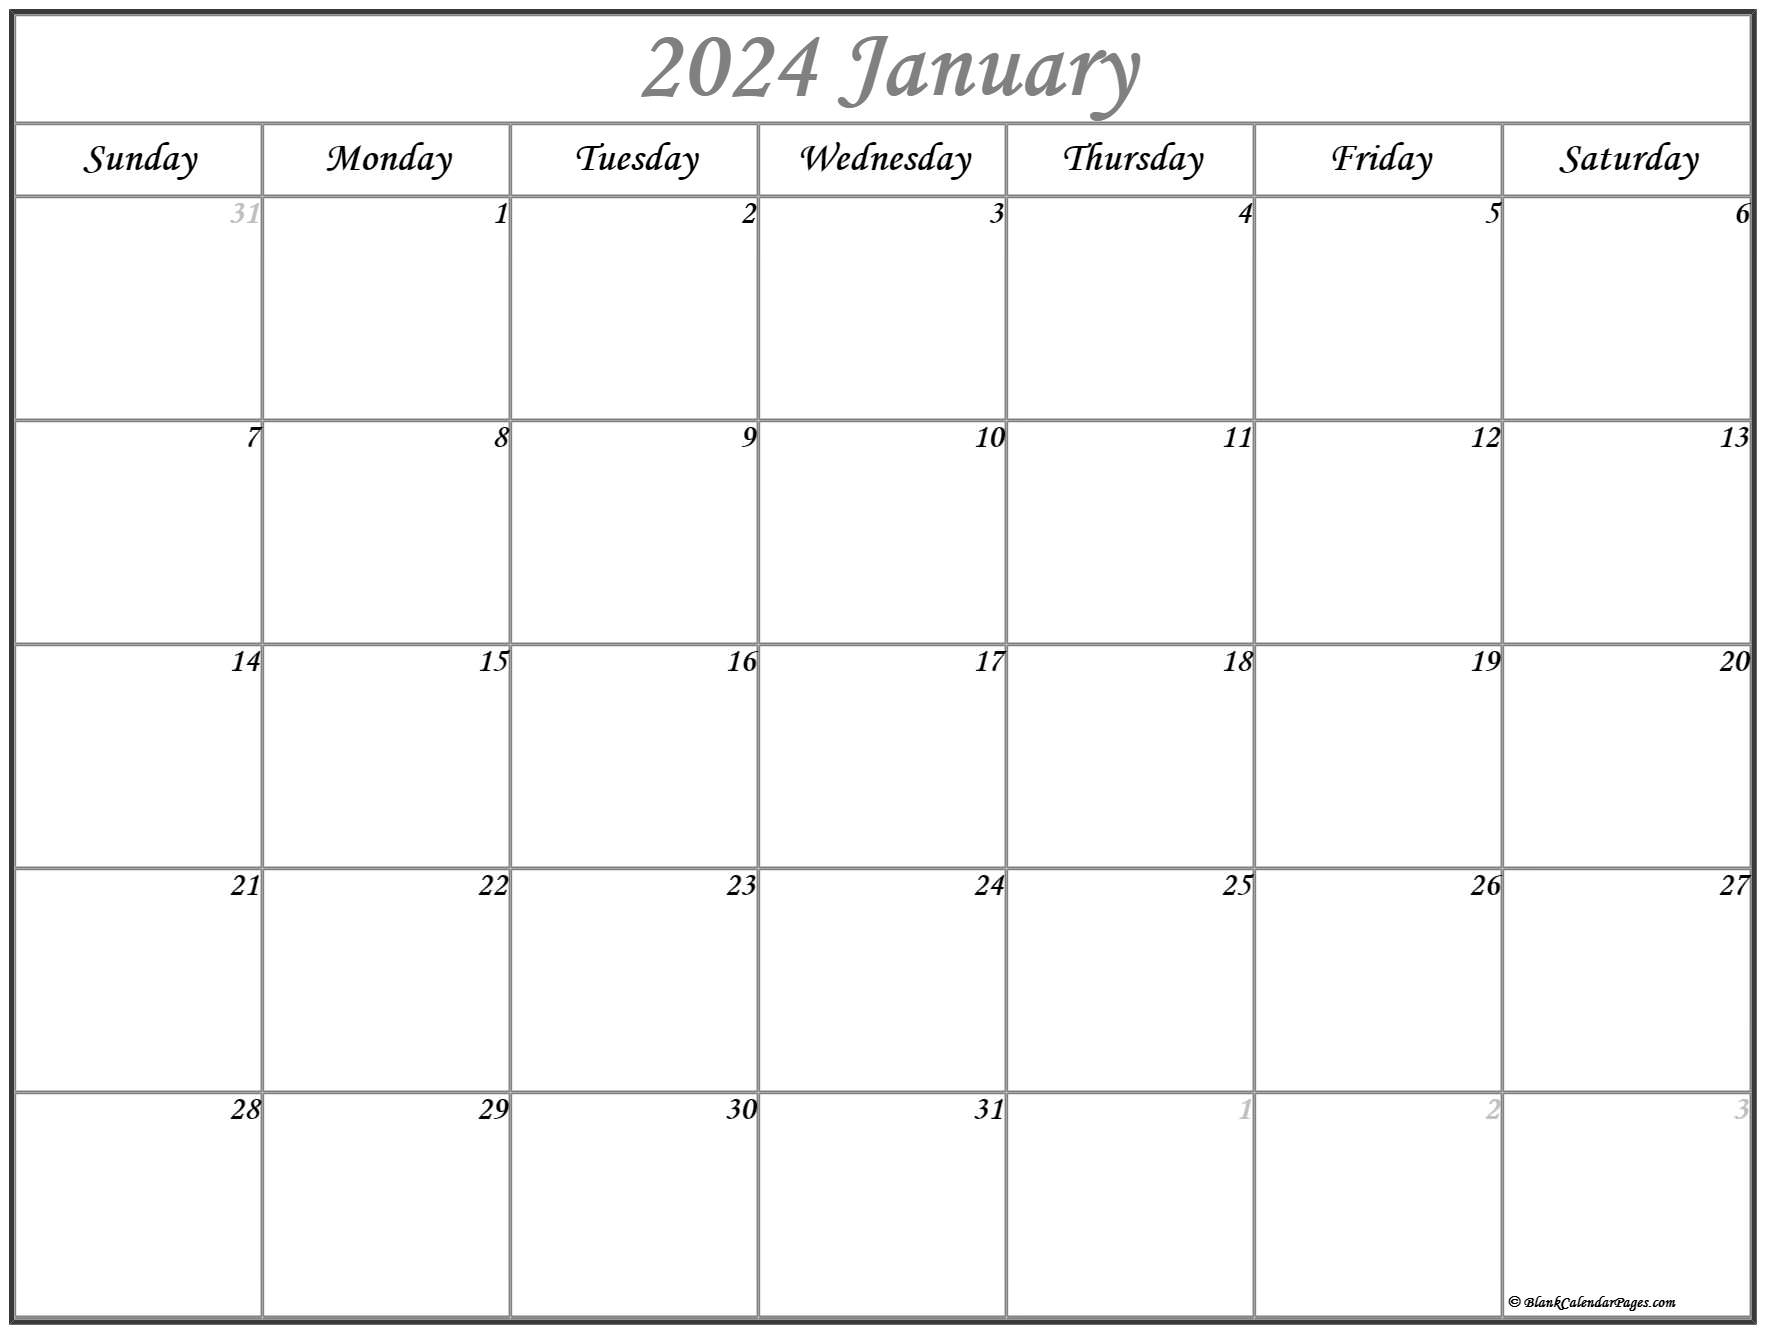 2024 Monthly Calendar Pdf Free Printable Templates 2024 Monthly - Free Printable 2024 Monthly Calendar Xml